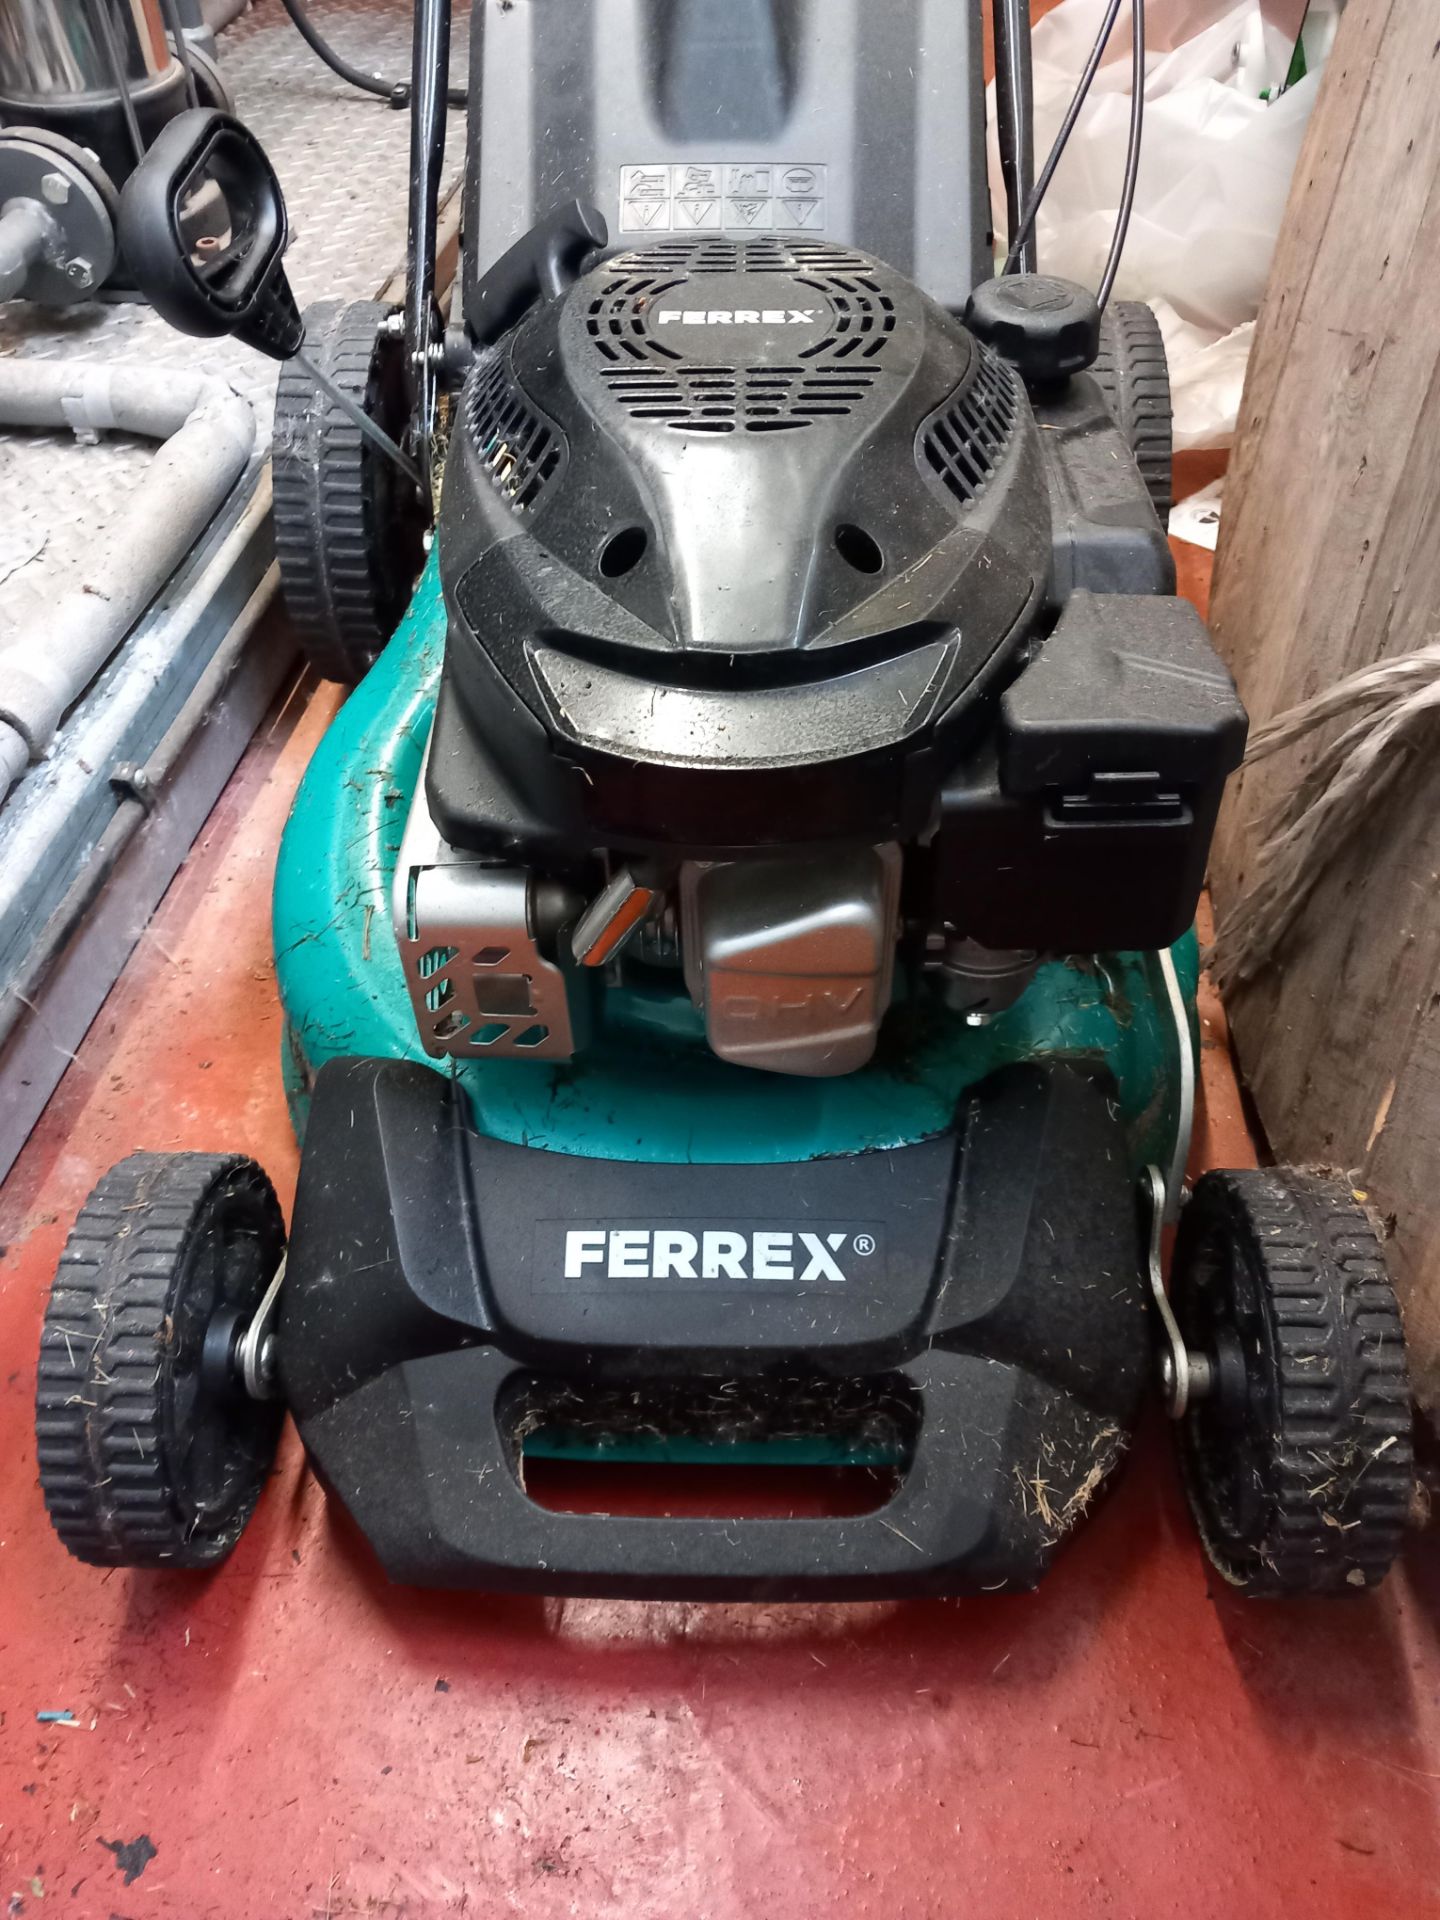 Ferrex petrol lawn mower - Image 2 of 2